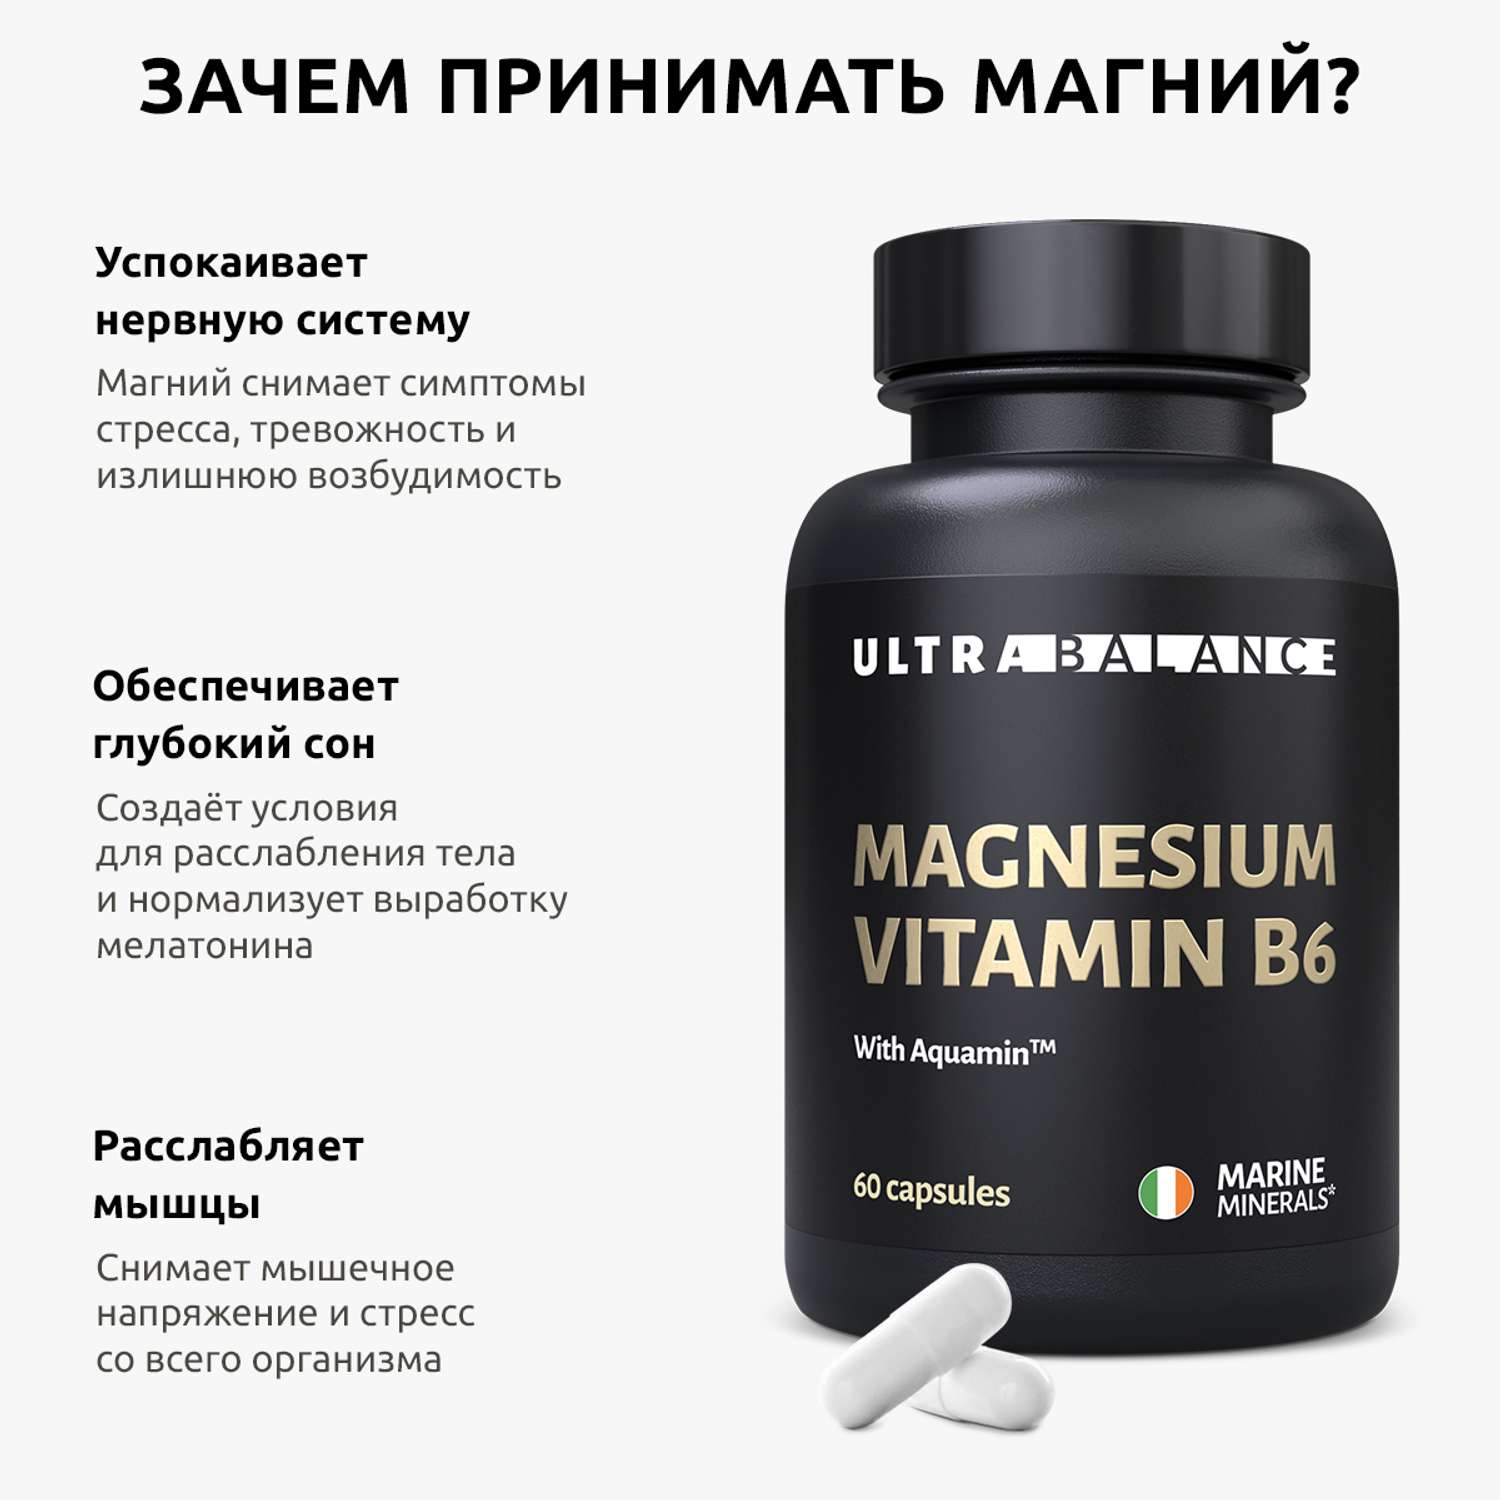 Магний витамин В6 UltraBalance антистресс успокоительное Mg b6 премиум с аквамином 60 капсул - фото 2